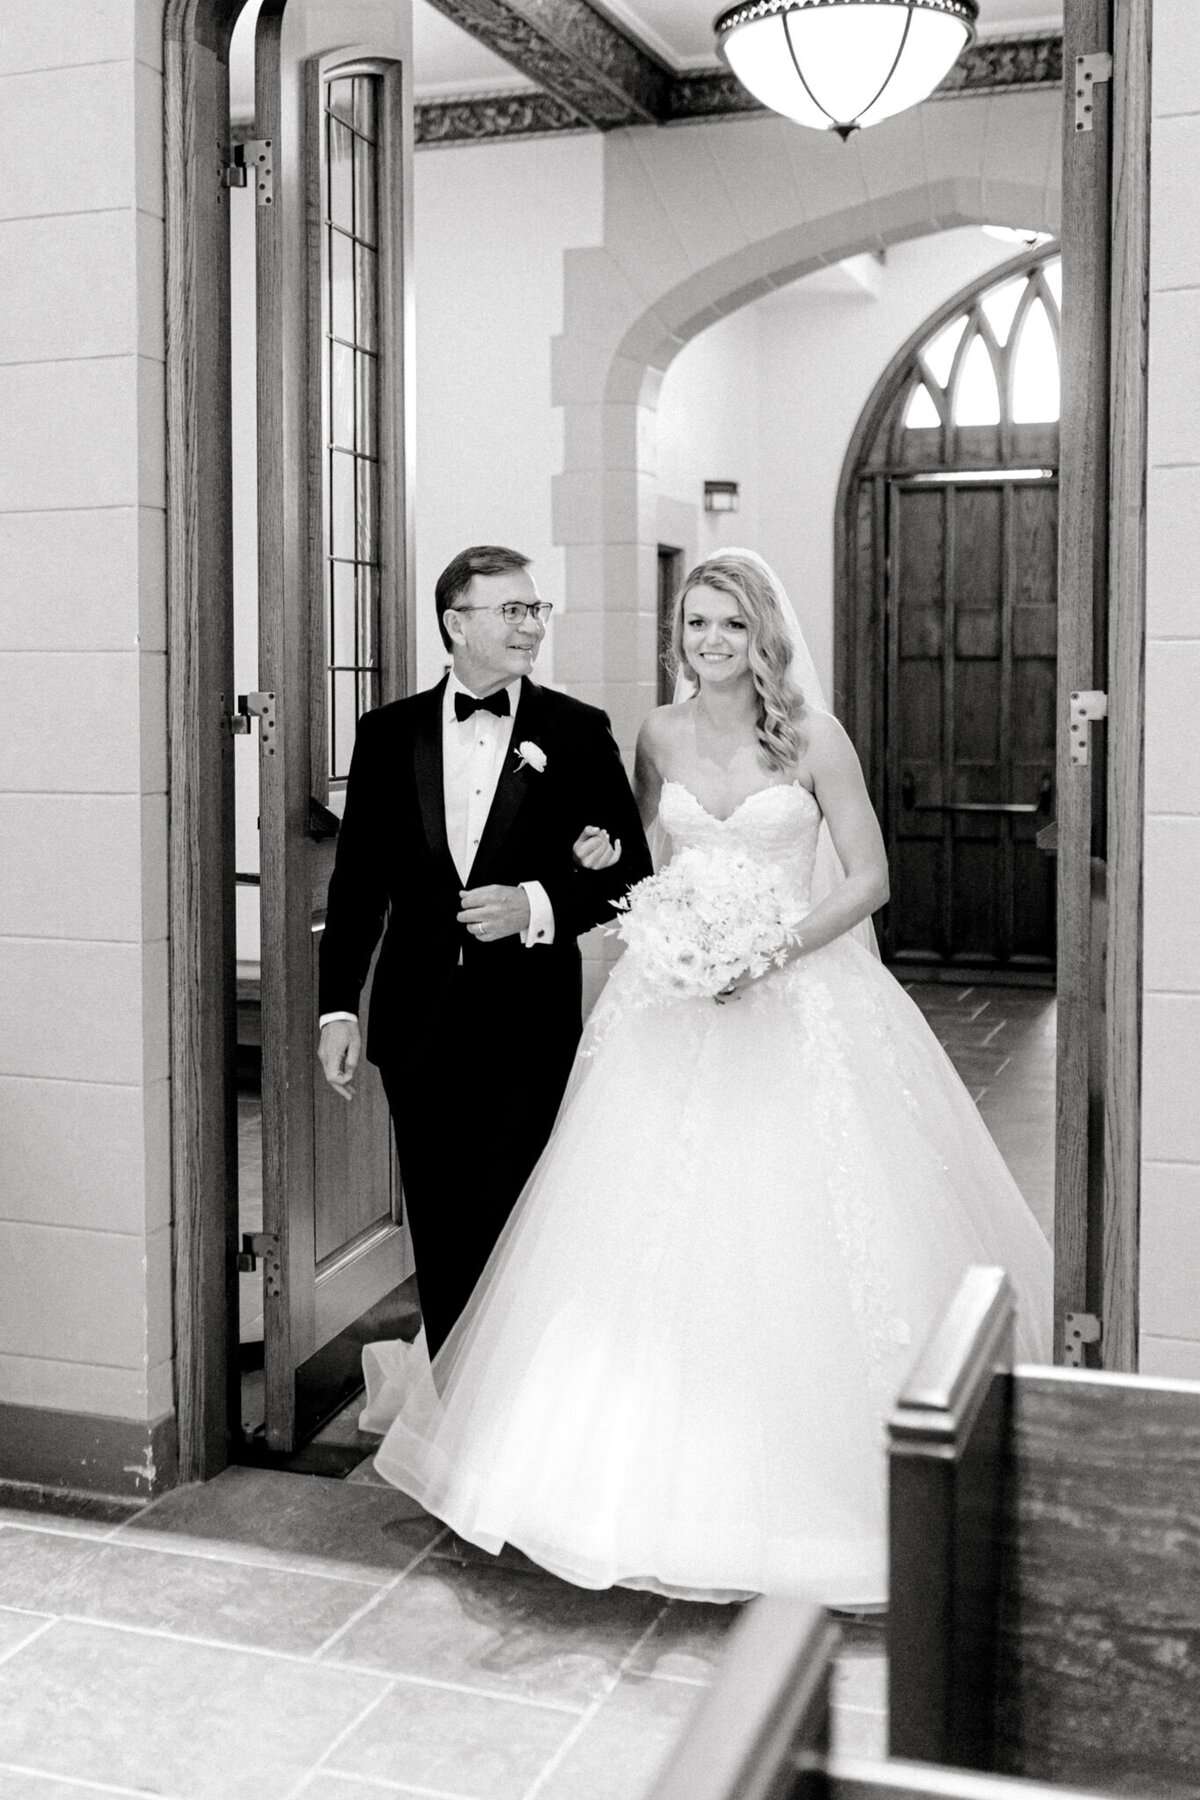 Shelby & Thomas's Wedding at HPUMC The Room on Main | Dallas Wedding Photographer | Sami Kathryn Photography-104